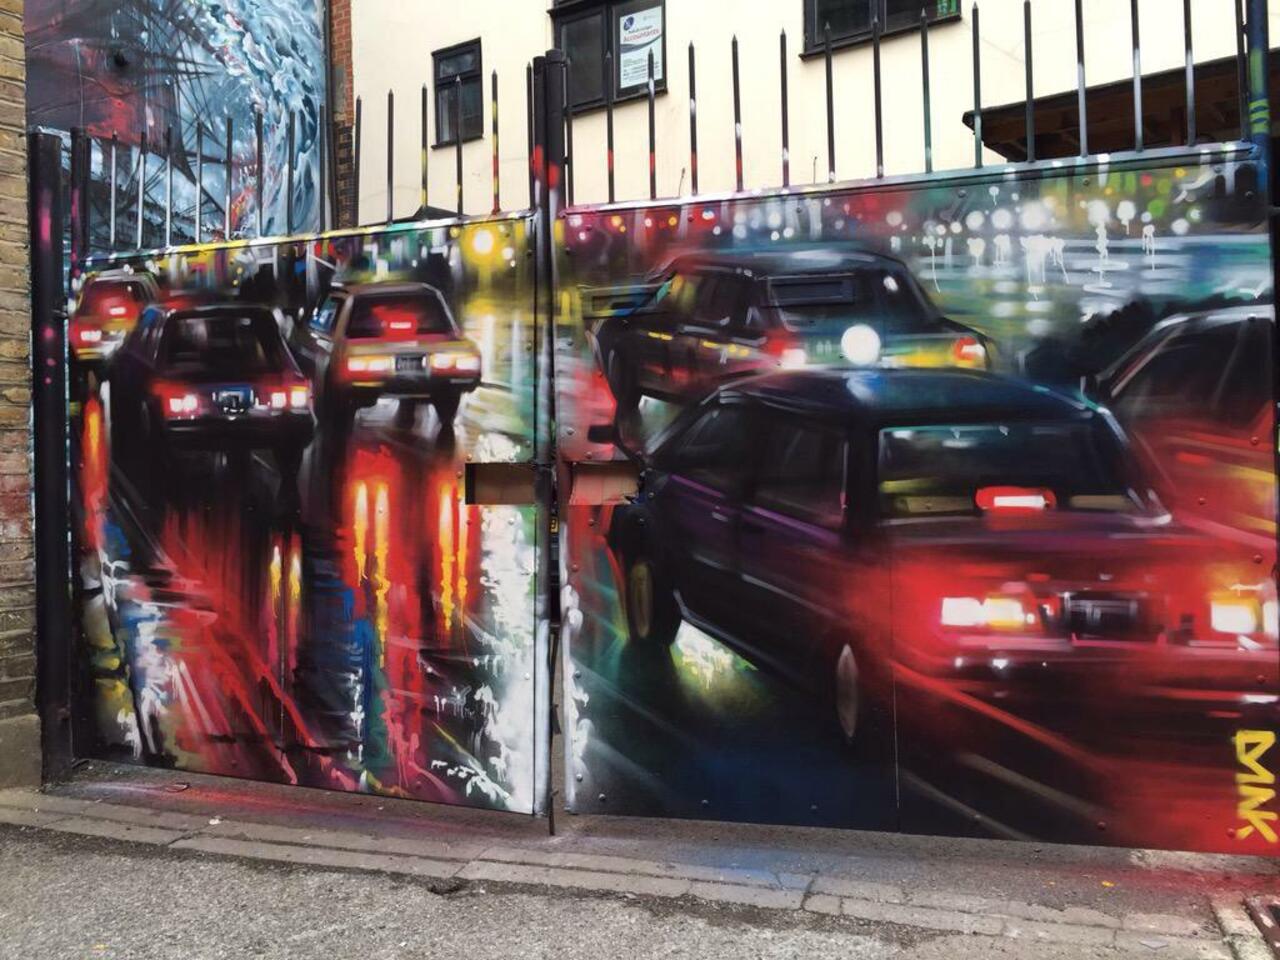 New Street Art by DanKitchener in Brick Lane London 

#art #graffiti #mural #streetart http://t.co/EBwJOs1ac7